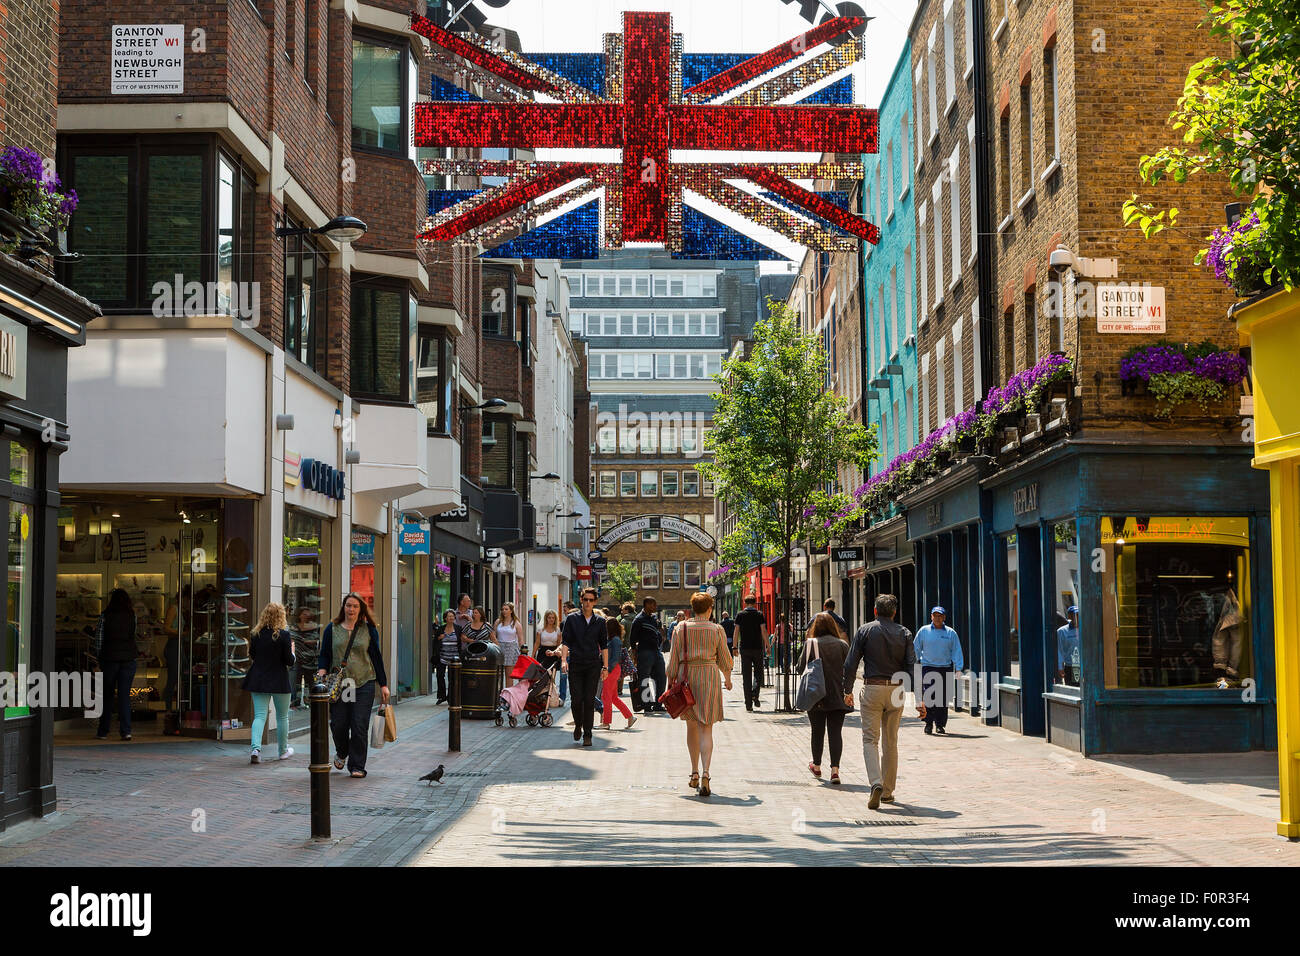 London, Carnaby Street Stockfoto